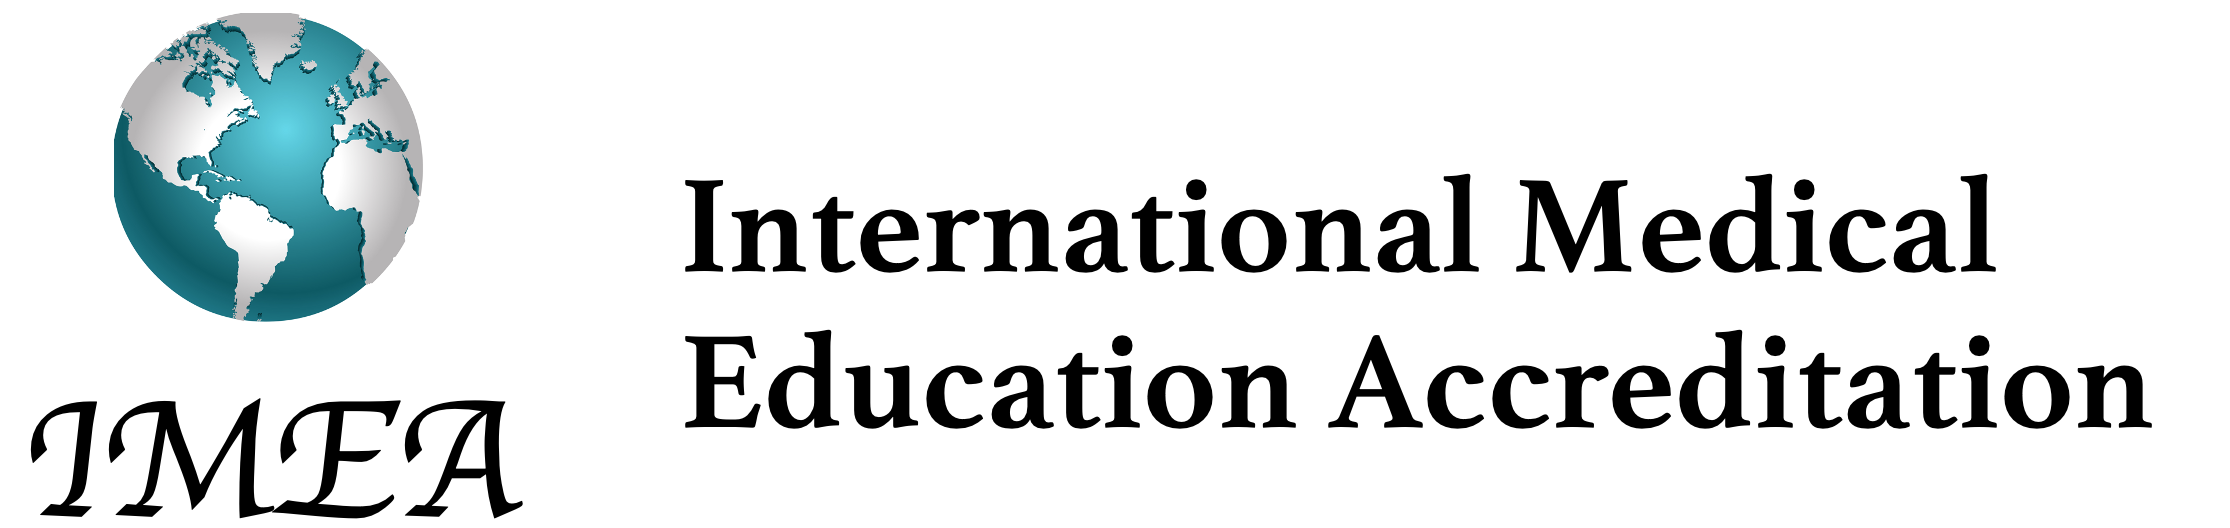 International Medical Education Accreditation